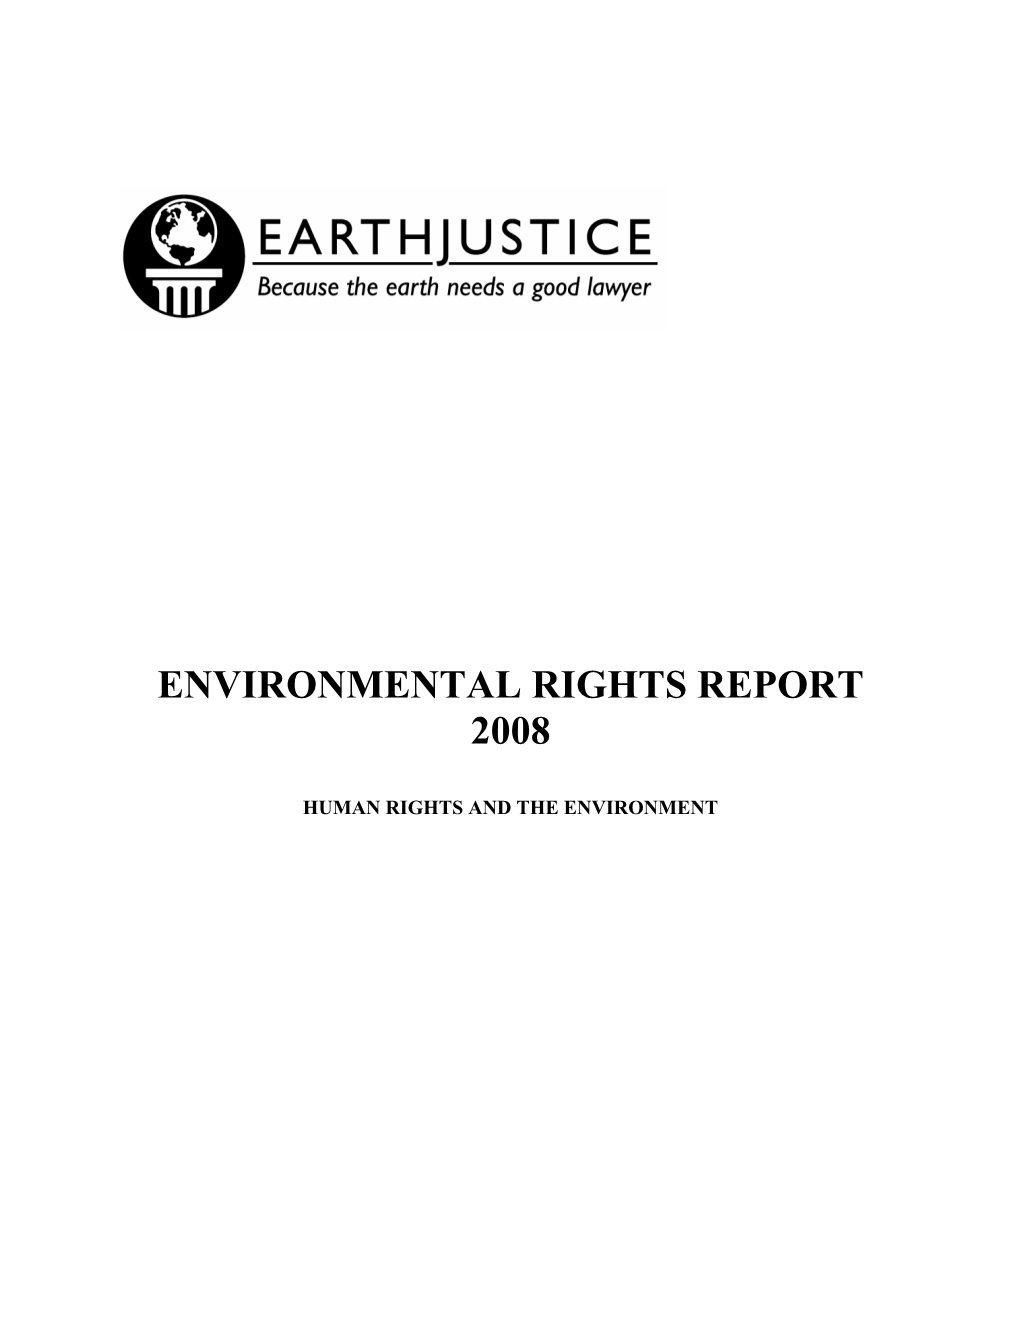 Environmental Rights Report 2008